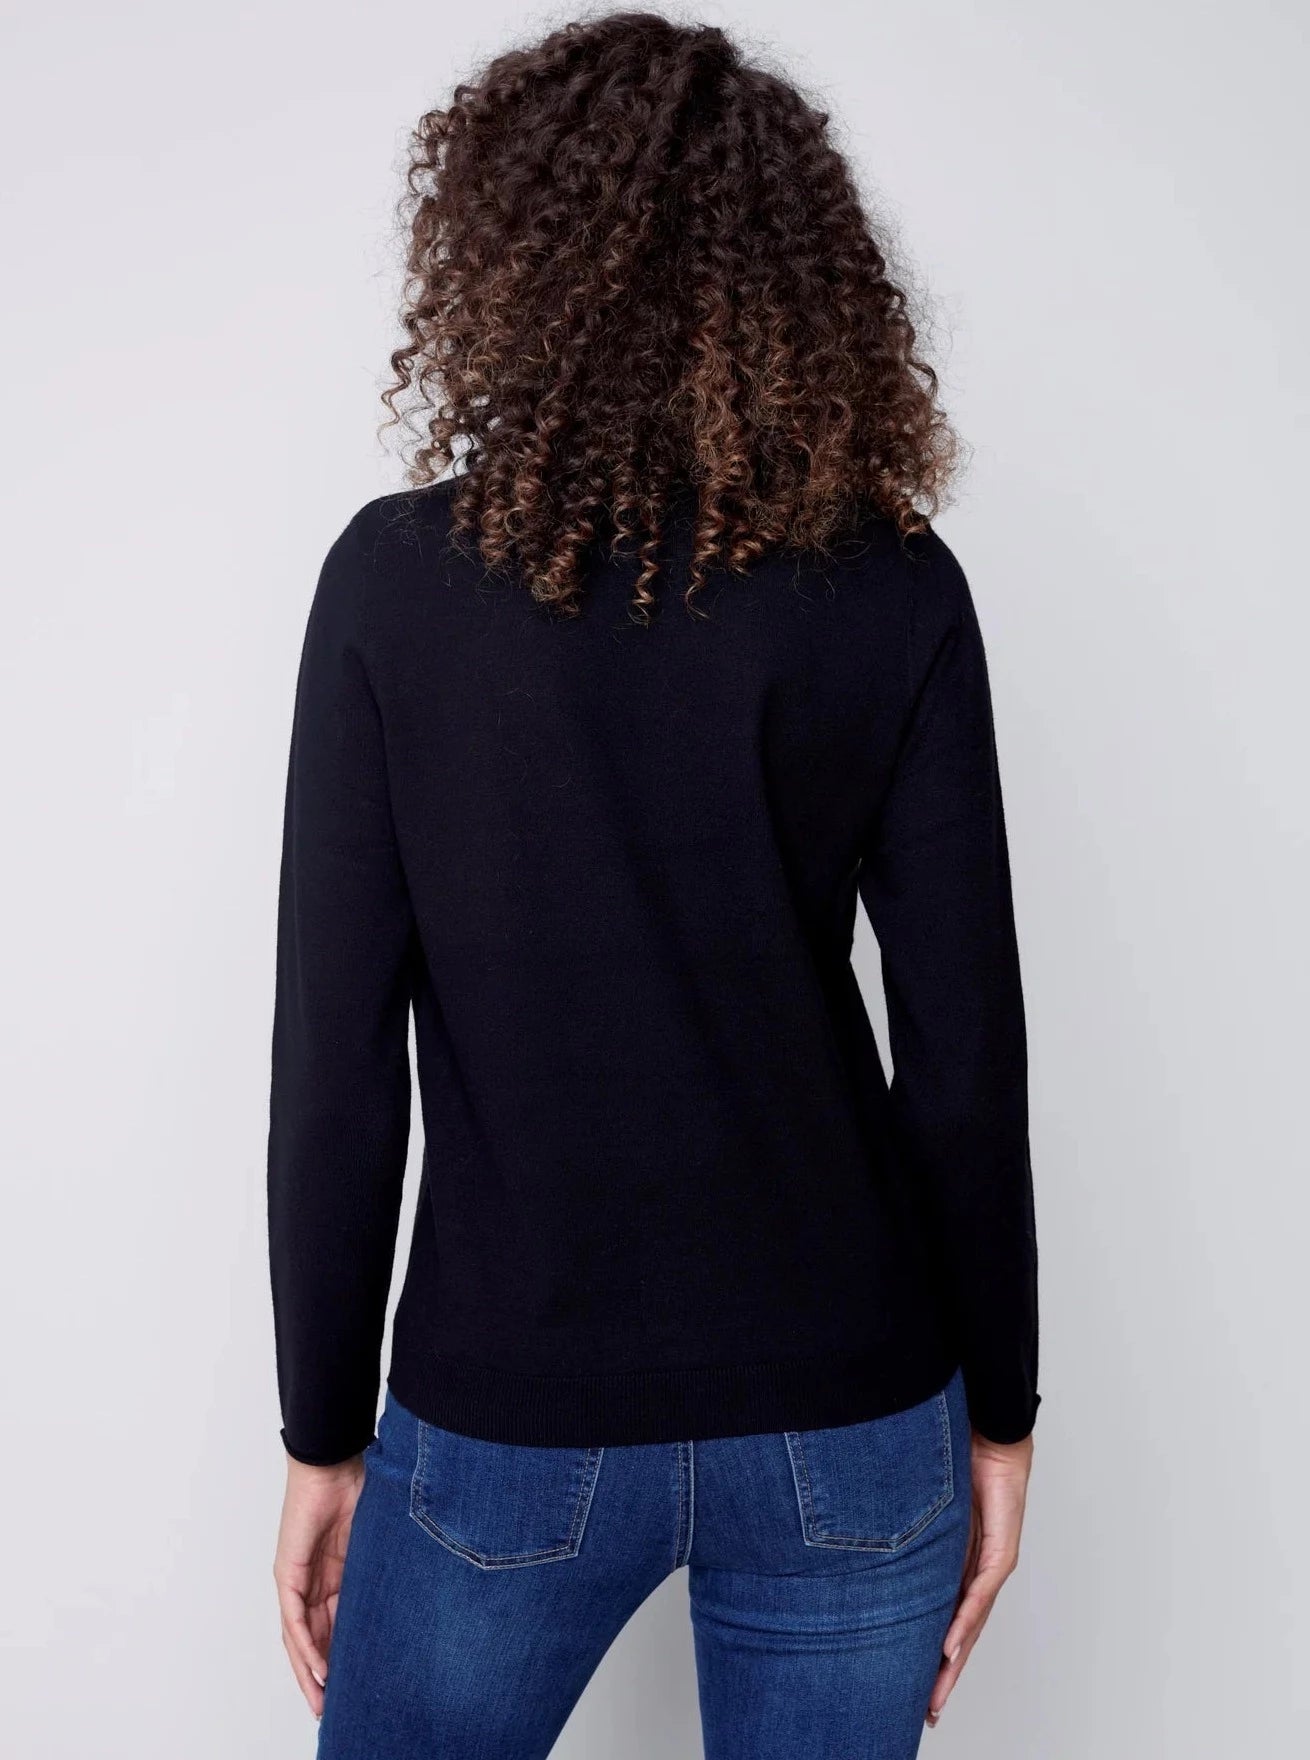 Crewneck Sweater With Side Diagonal Zipper Detail [Black-C2571]